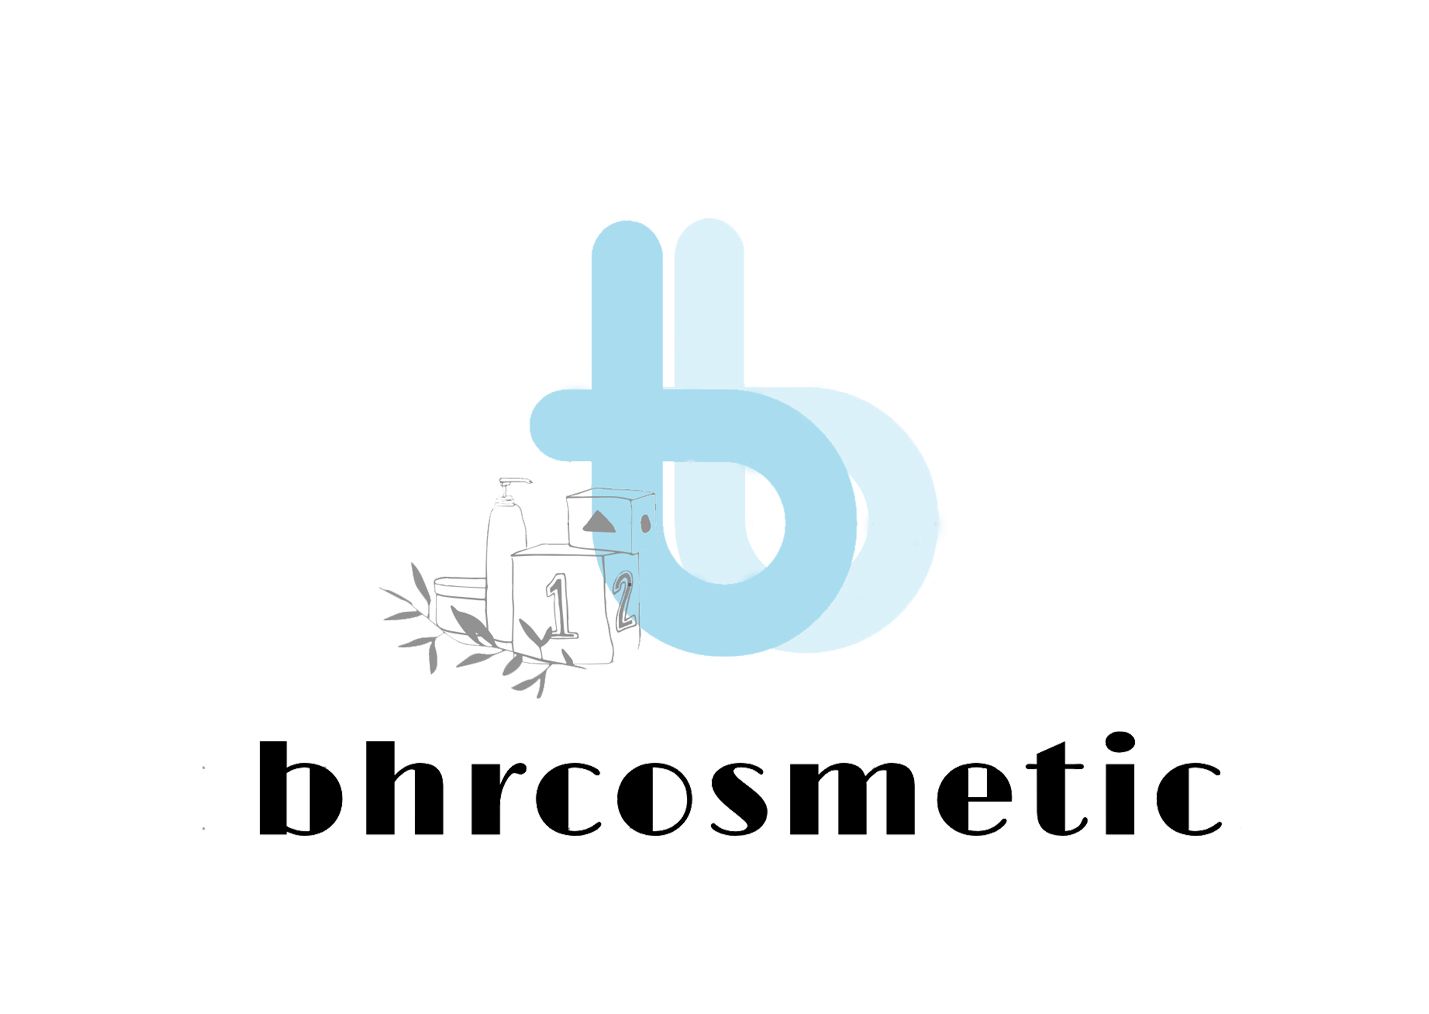 bhrcosmetic